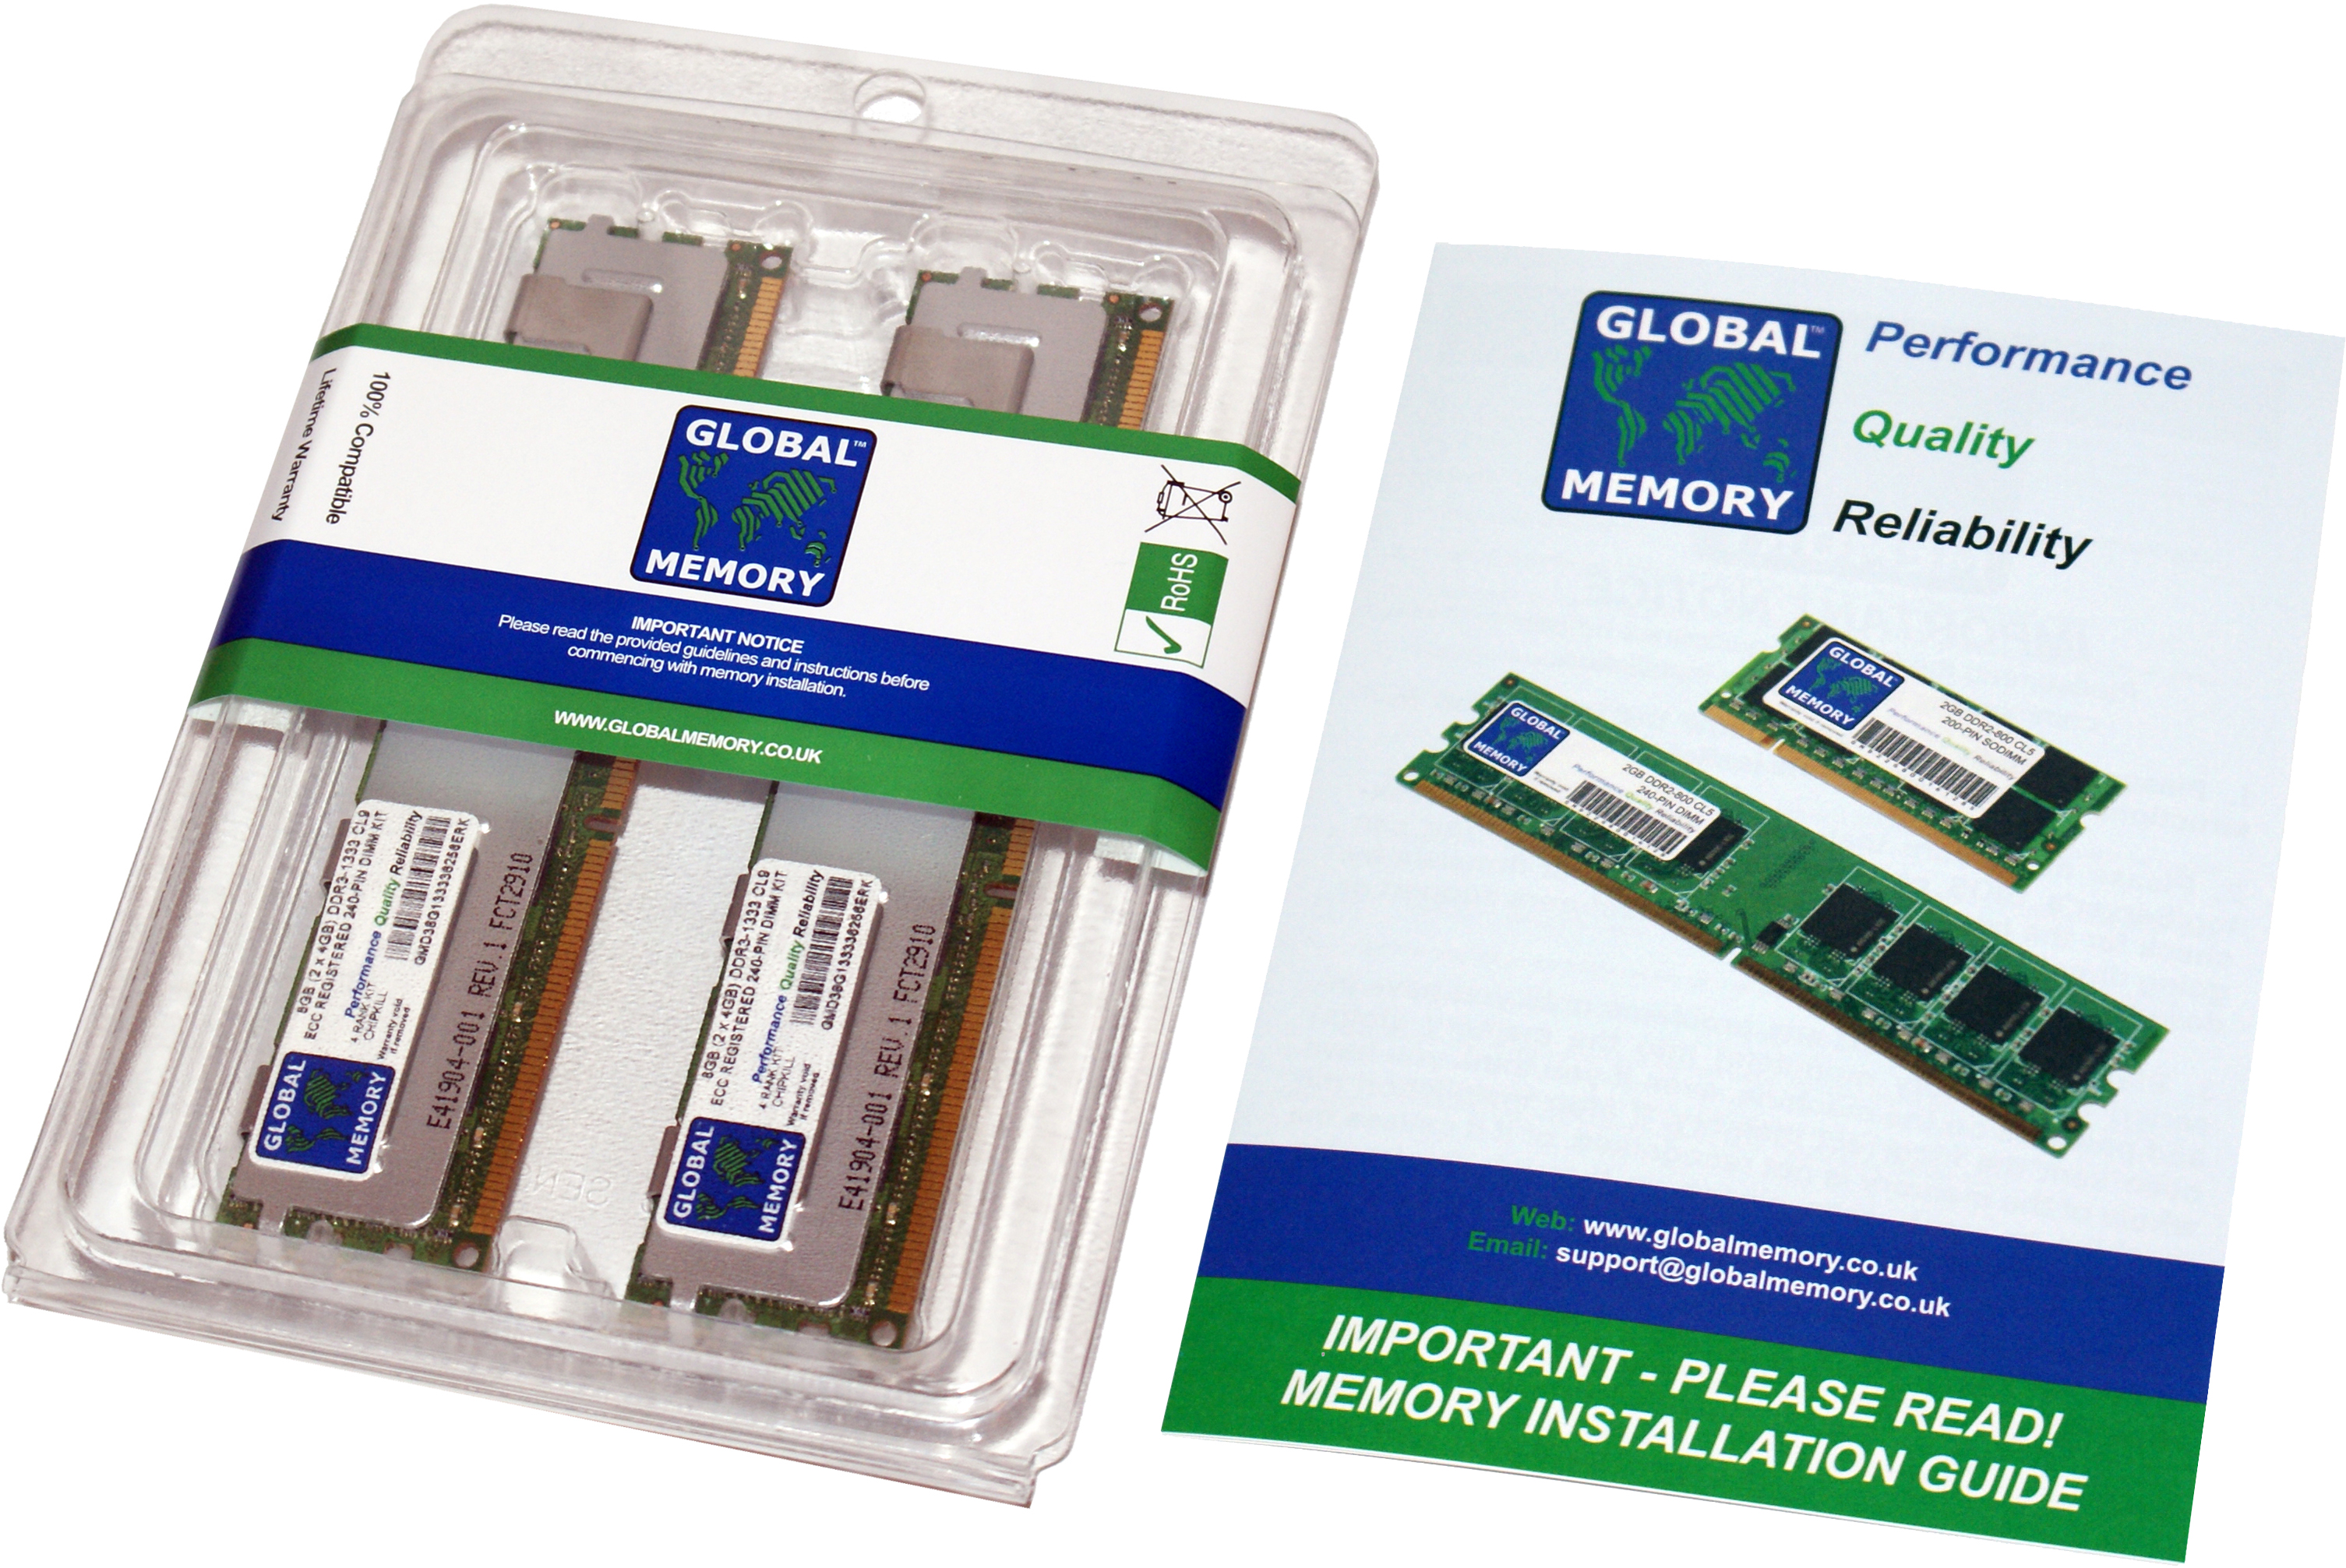 32GB (2 x 16GB) DDR3 1333MHz PC3-10600 240-PIN ECC REGISTERED DIMM (RDIMM) MEMORY RAM KIT FOR IBM/LENOVO SERVERS/WORKSTATIONS (8 RANK KIT NON-CHIPKILL)